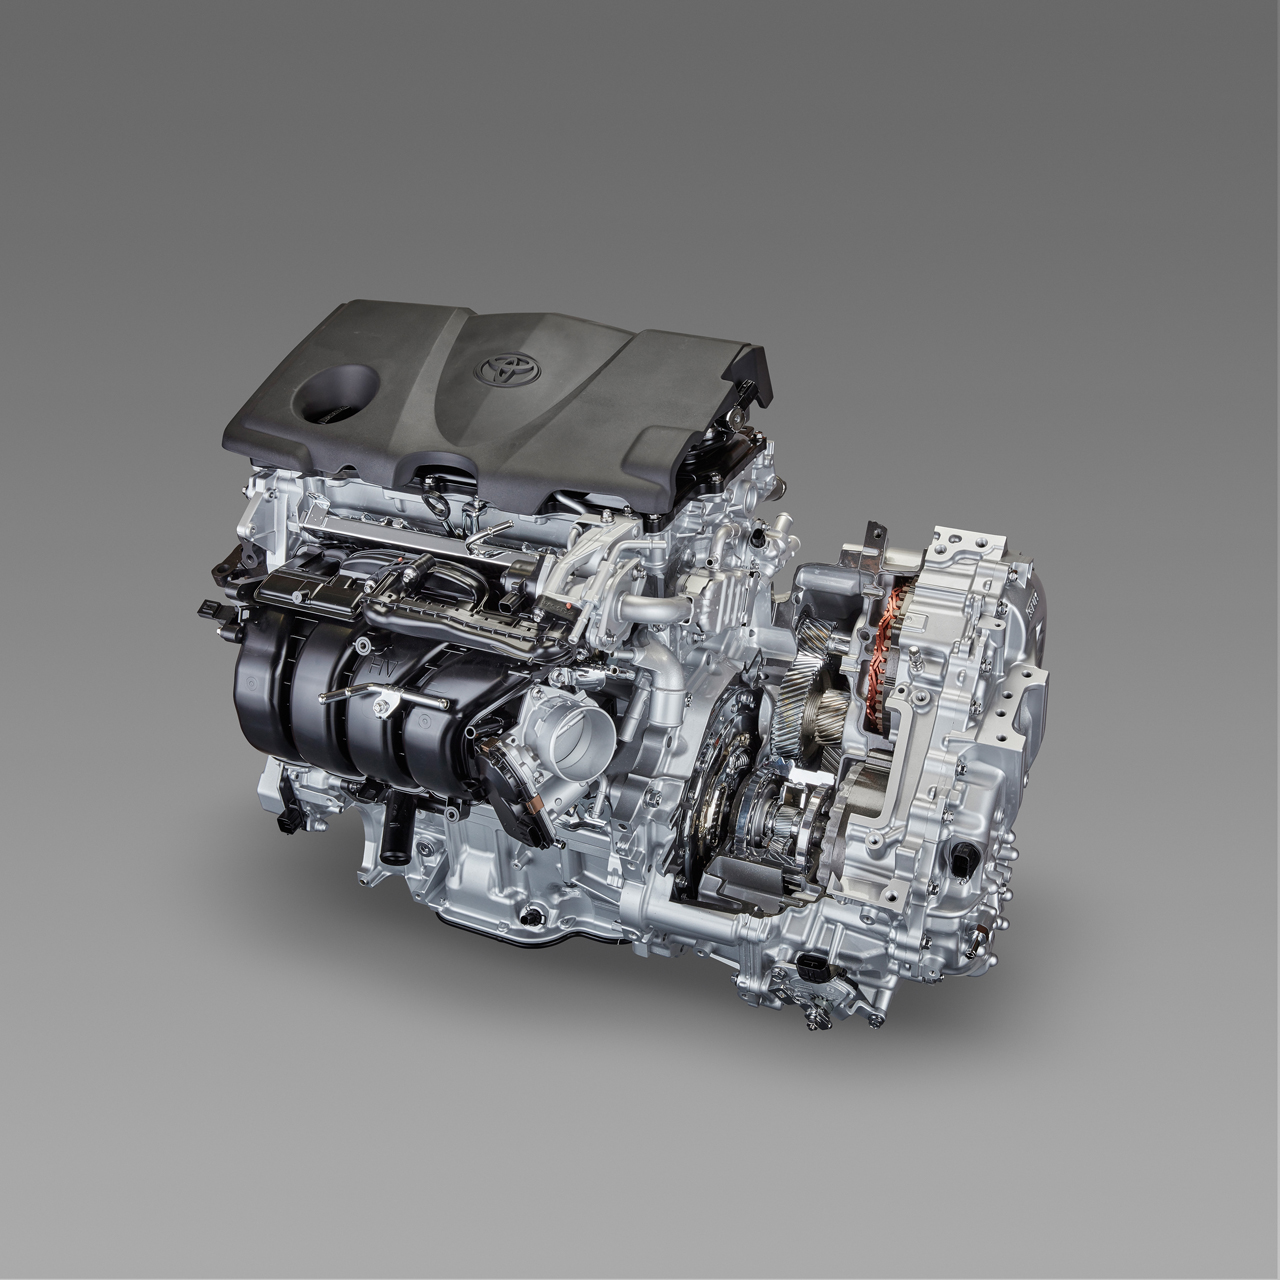 Toyota_New_Engines (7)